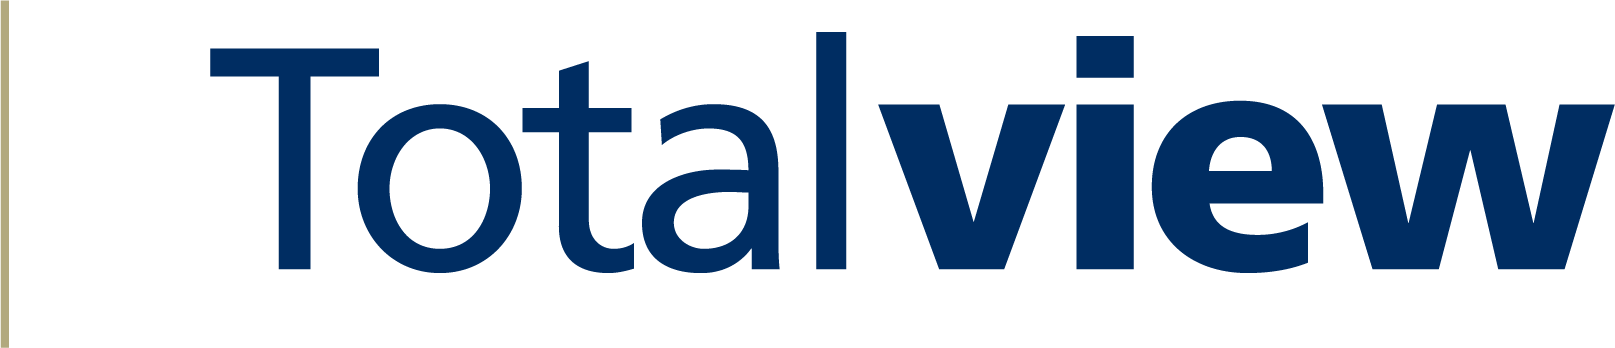 Totalview_logo